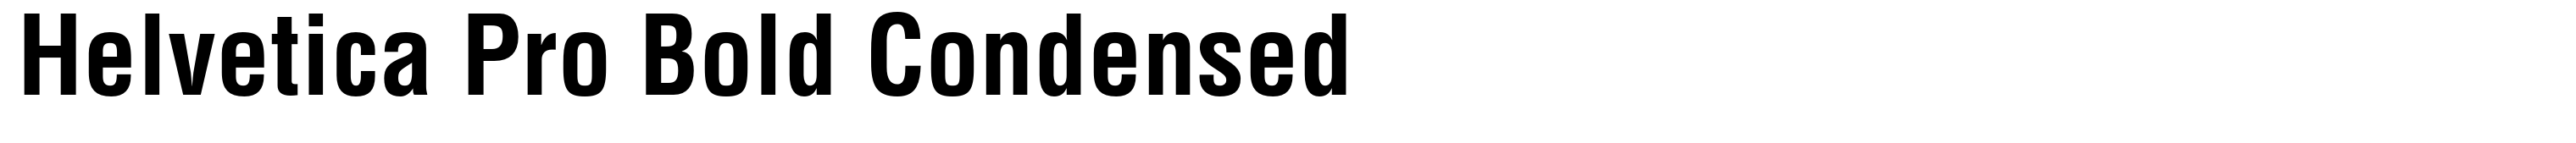 Helvetica Pro Bold Condensed